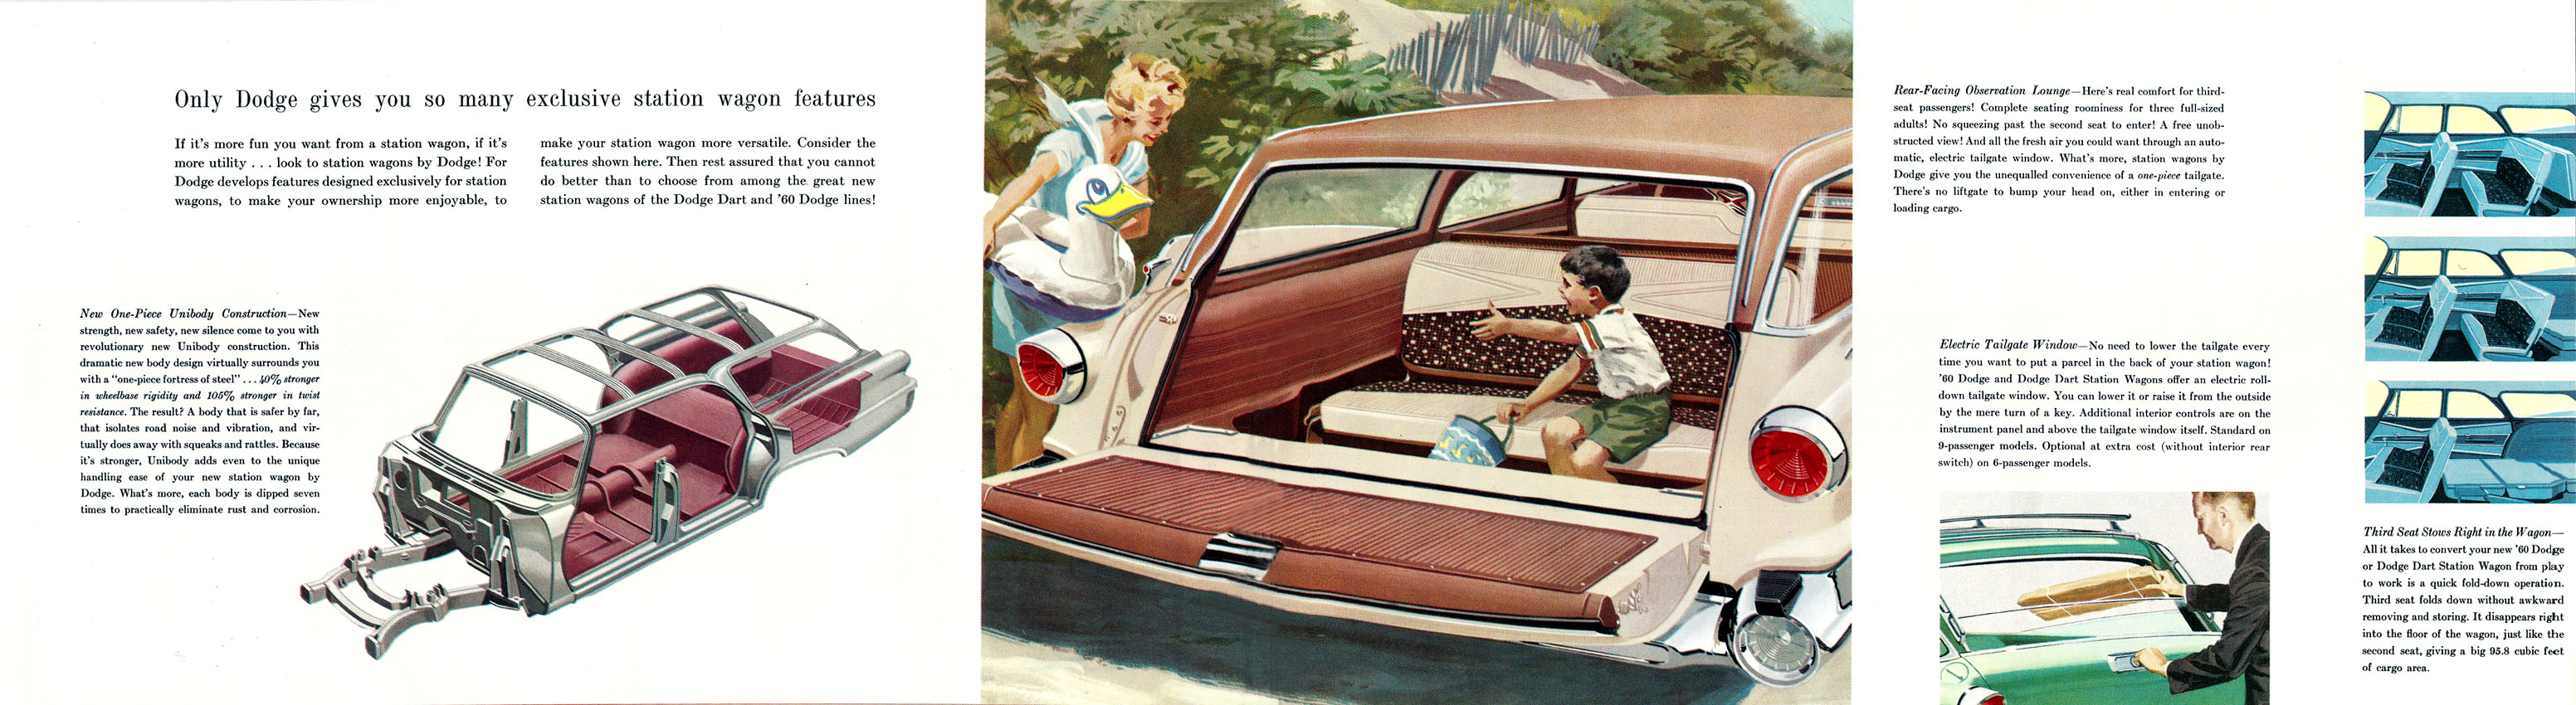 1960_Dodge_Wagons-07